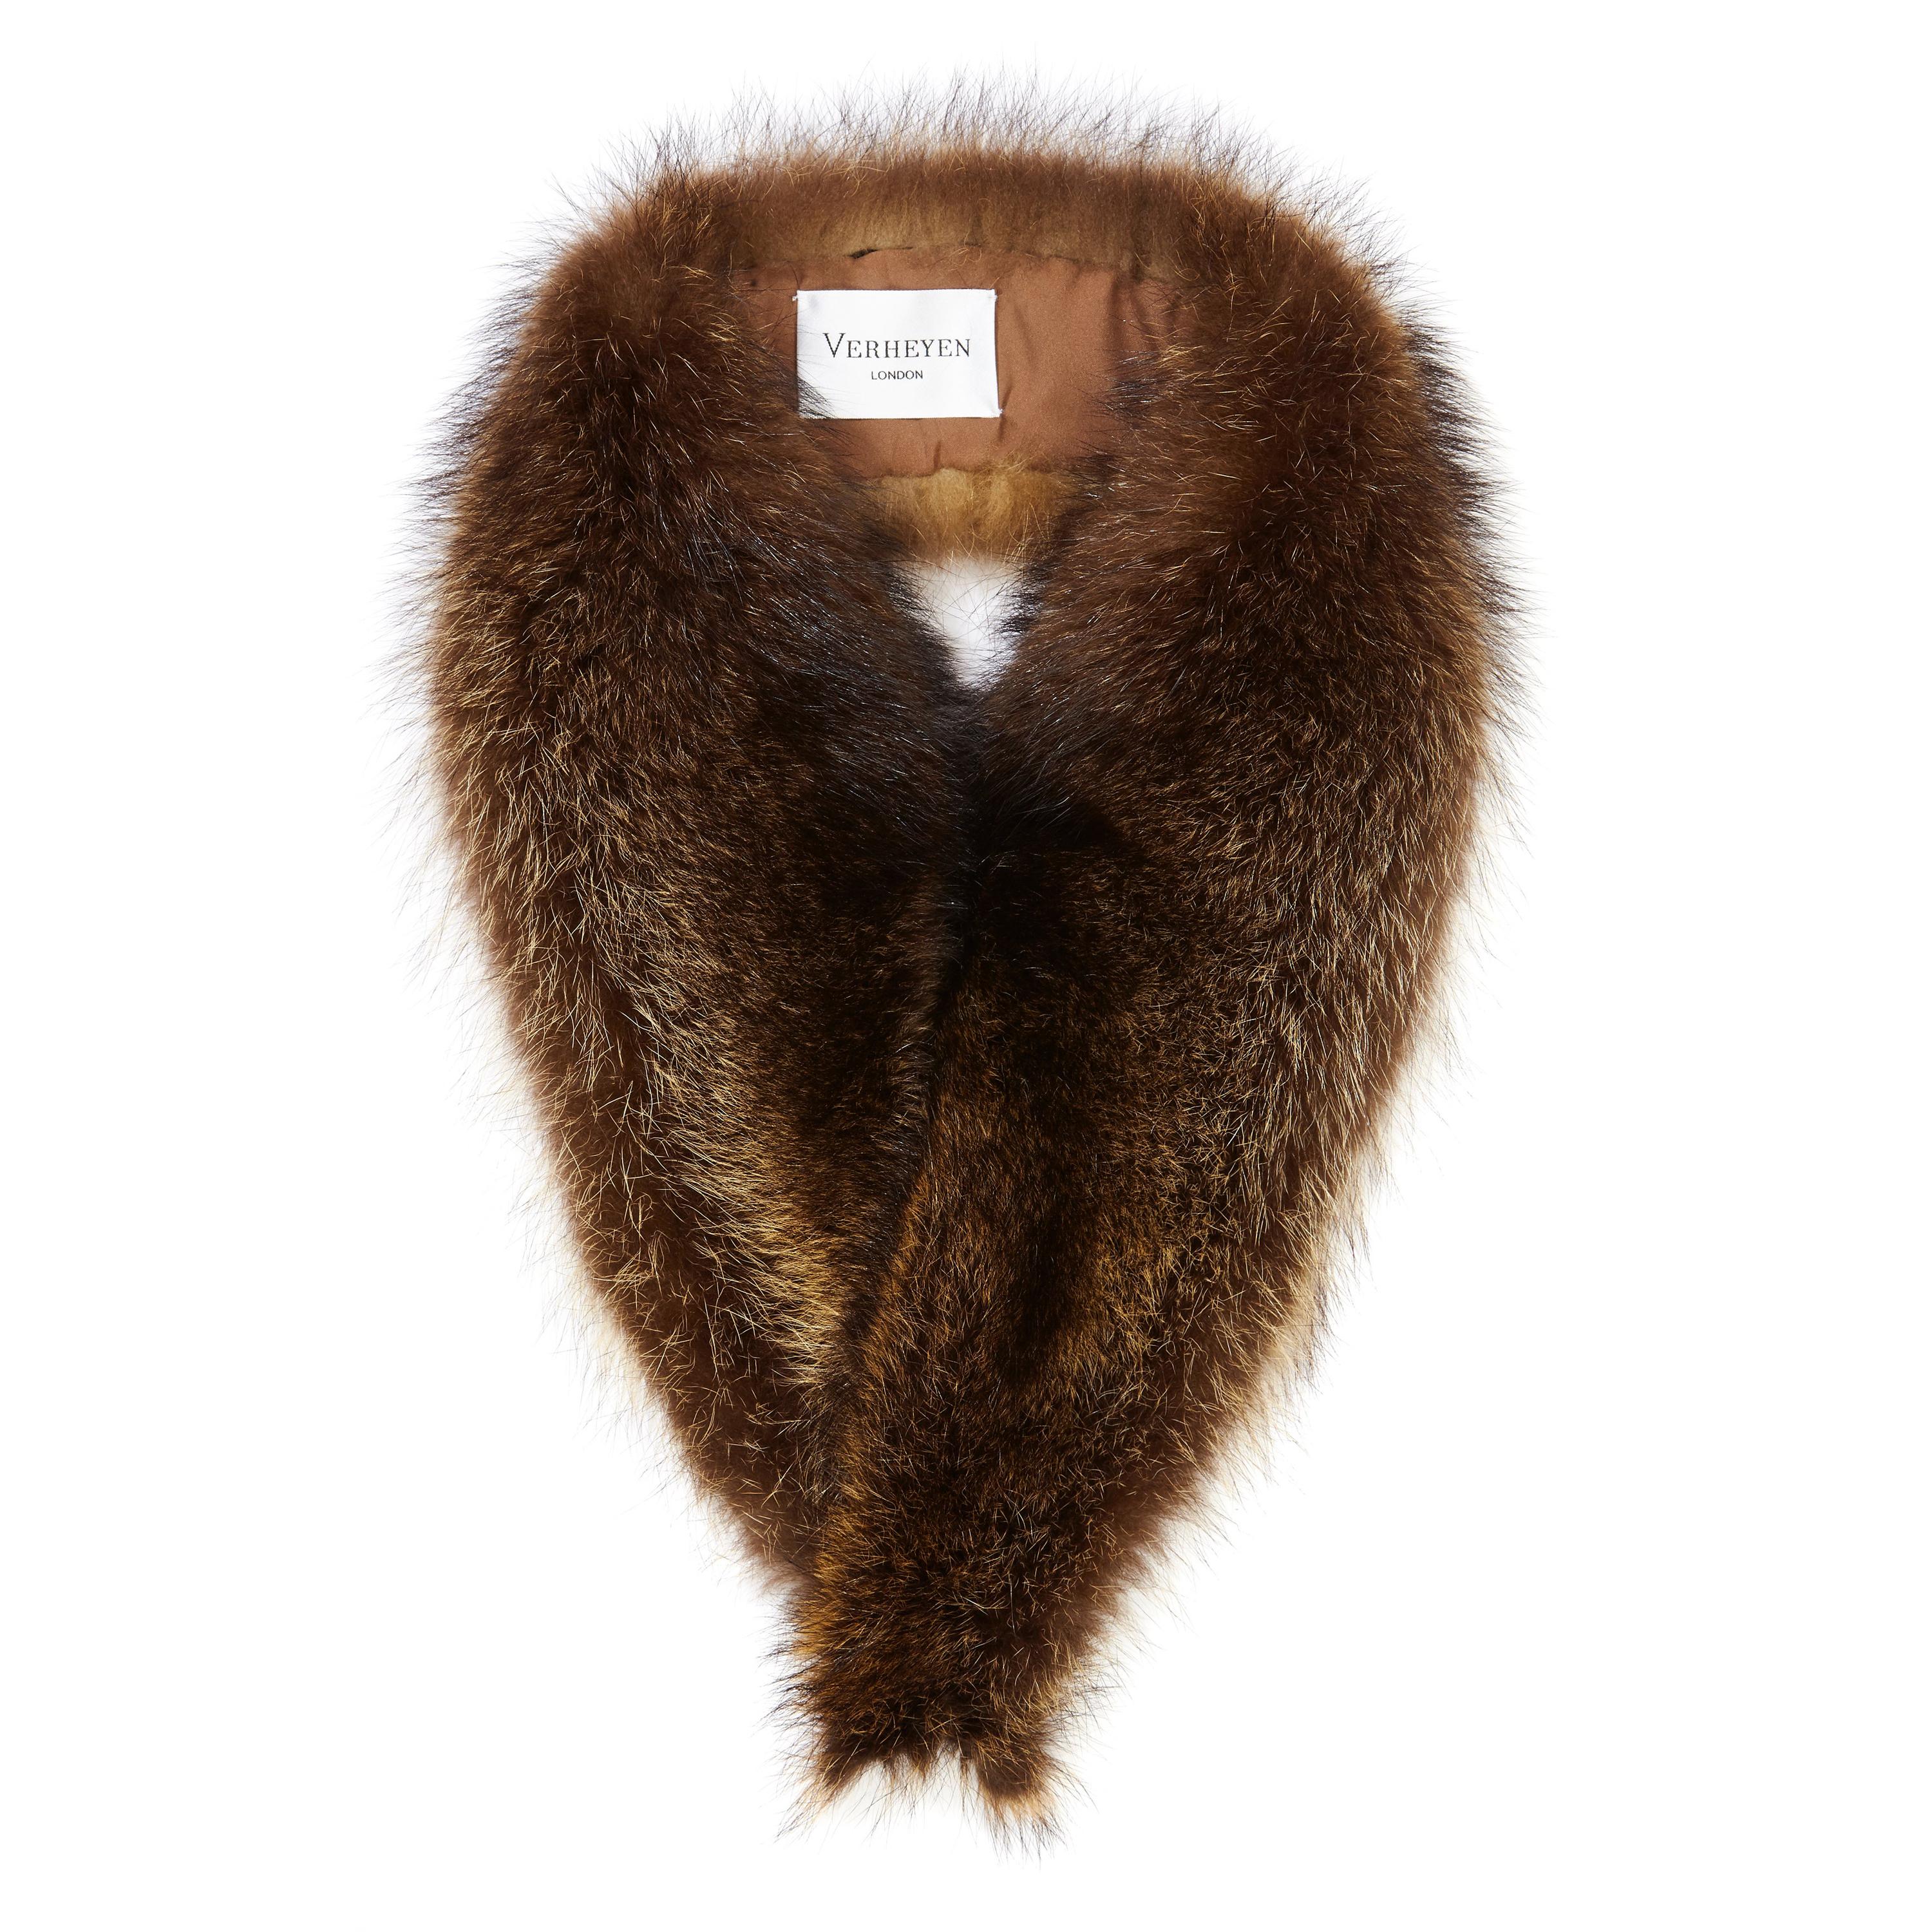 Verheyen London Mens Detachable Fur Collar in Raccoon - Brand New